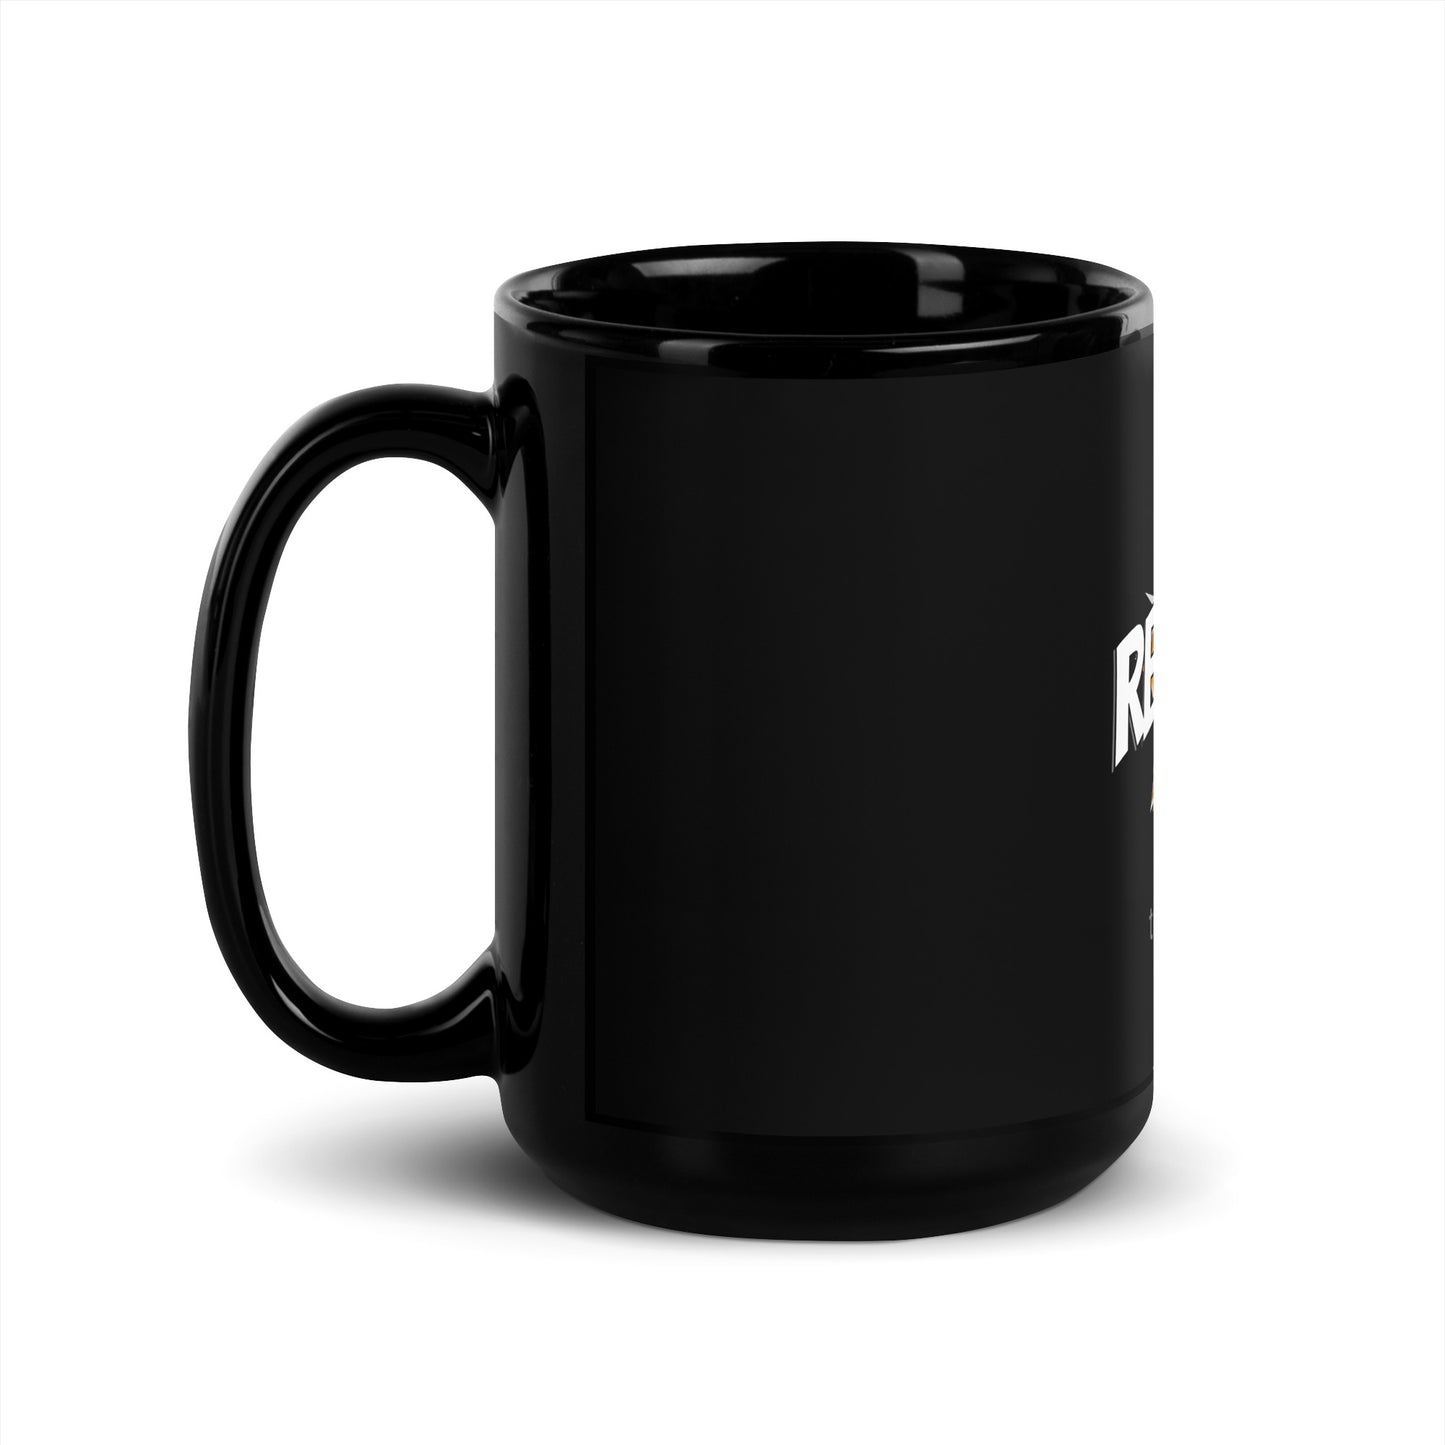 RESERVED Black Coffee Mug Action 11 oz or 15 oz